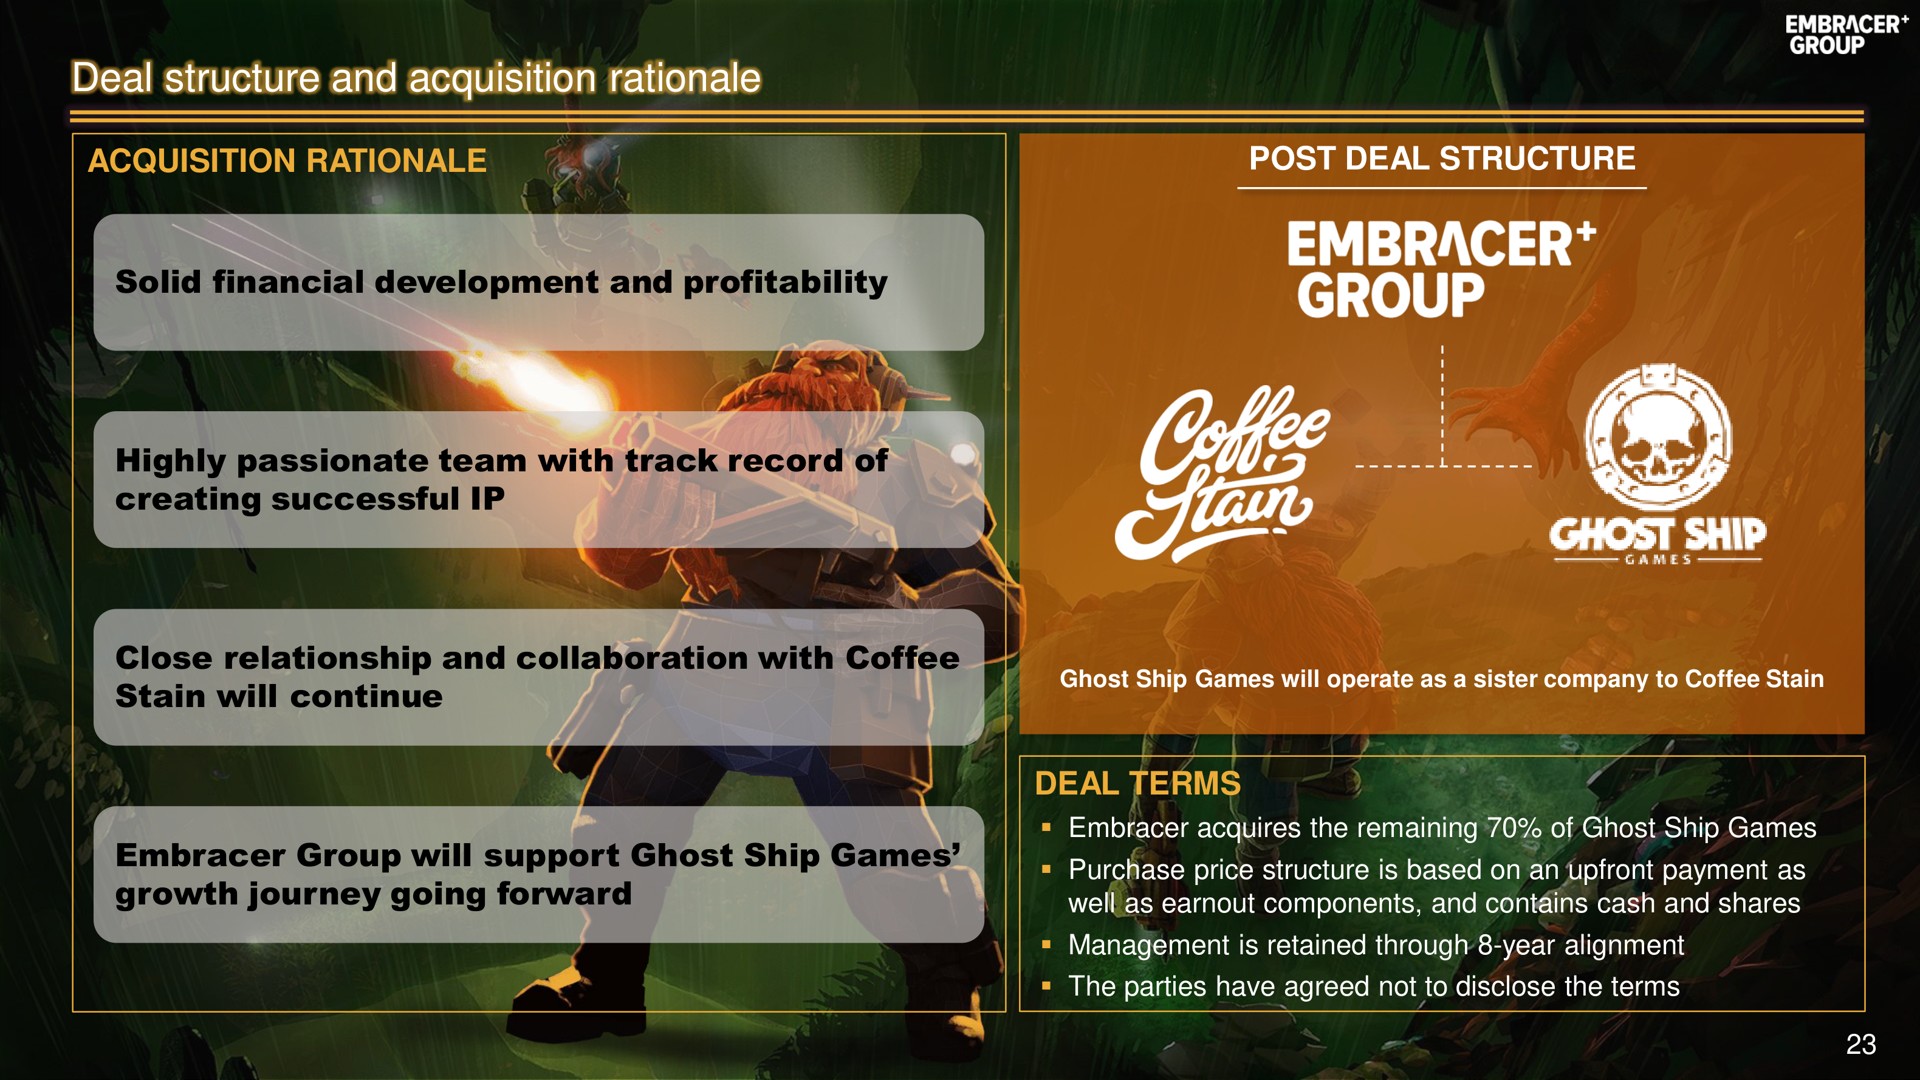 acquisition rationale | Embracer Group